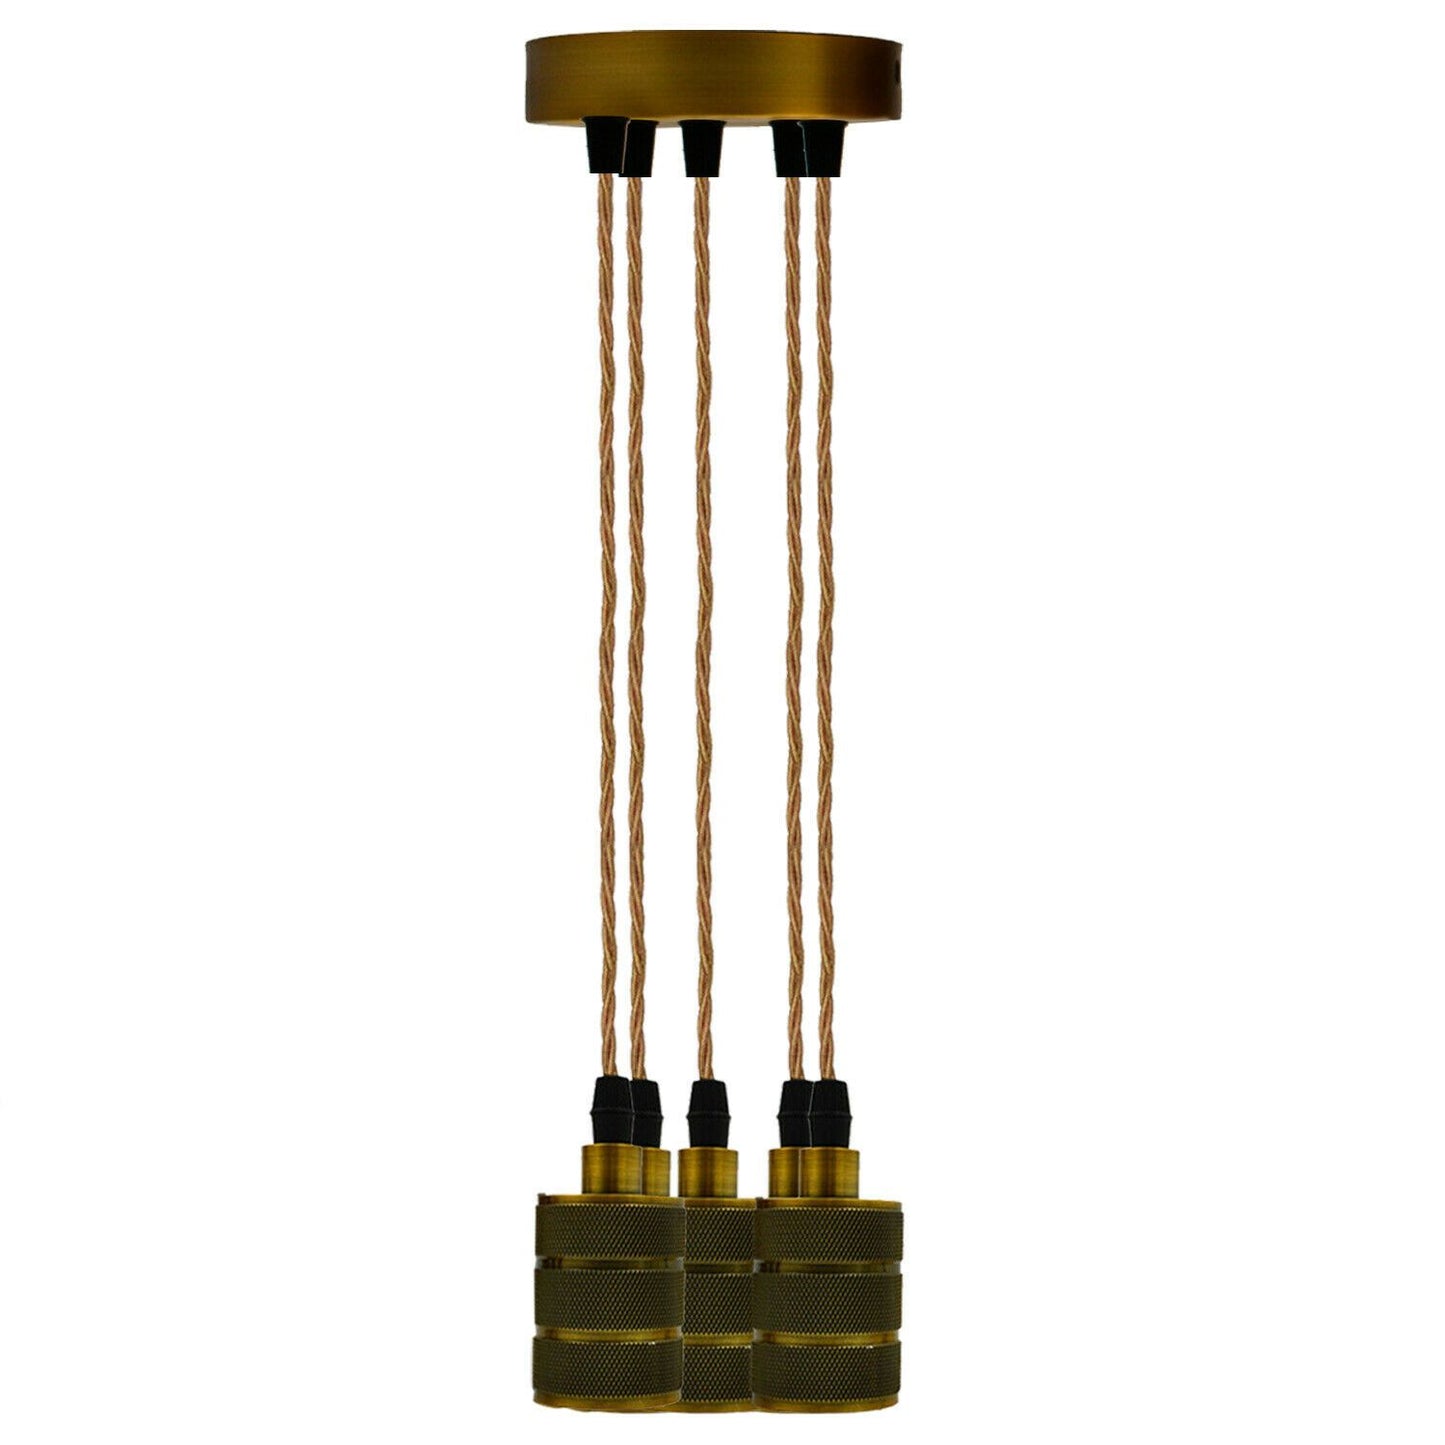 Ceiling Rose Industrial Pendant Light Fabric Flex 3Core Hanging Lamp Holder Kit~1682